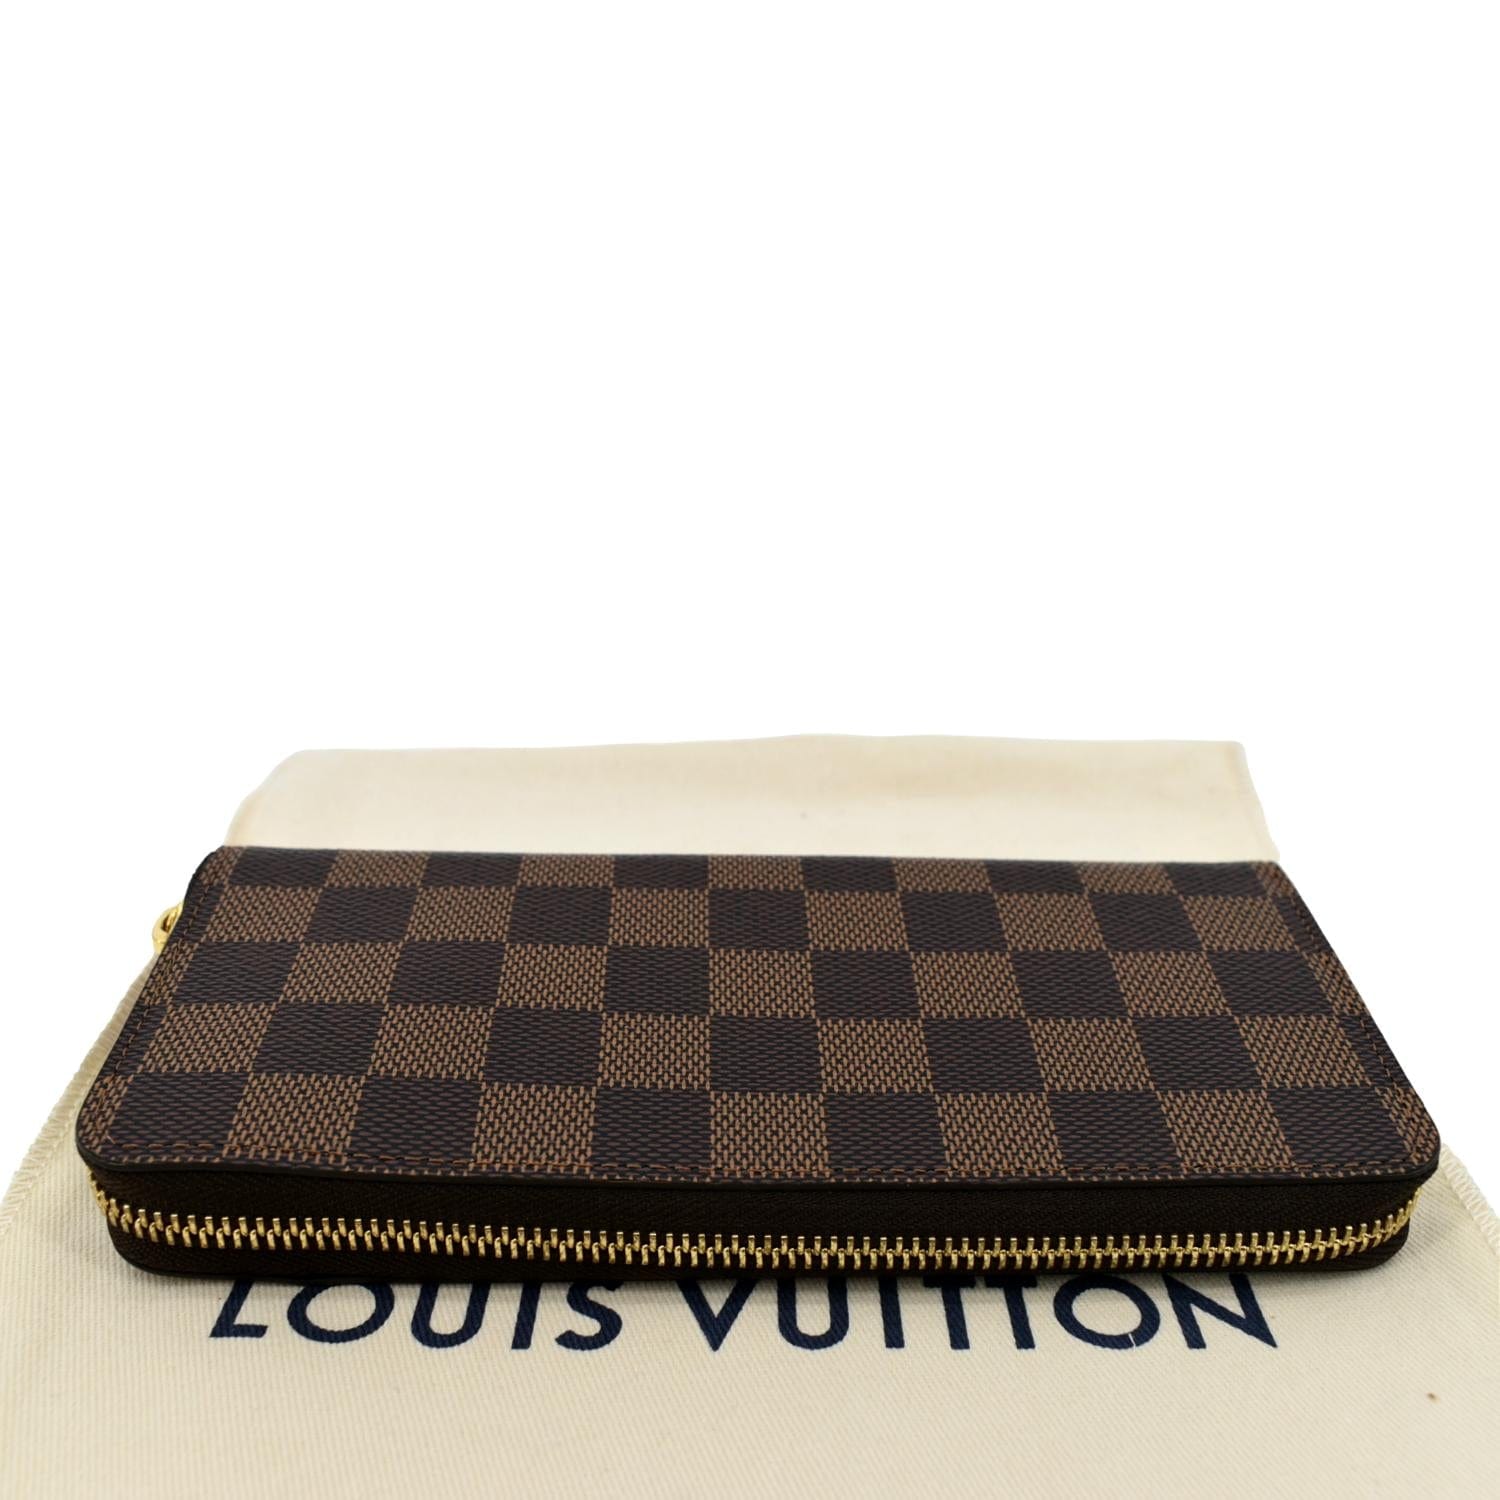 Date Code & Stamp] Louis Vuitton Damier Azur Zippy Wallet